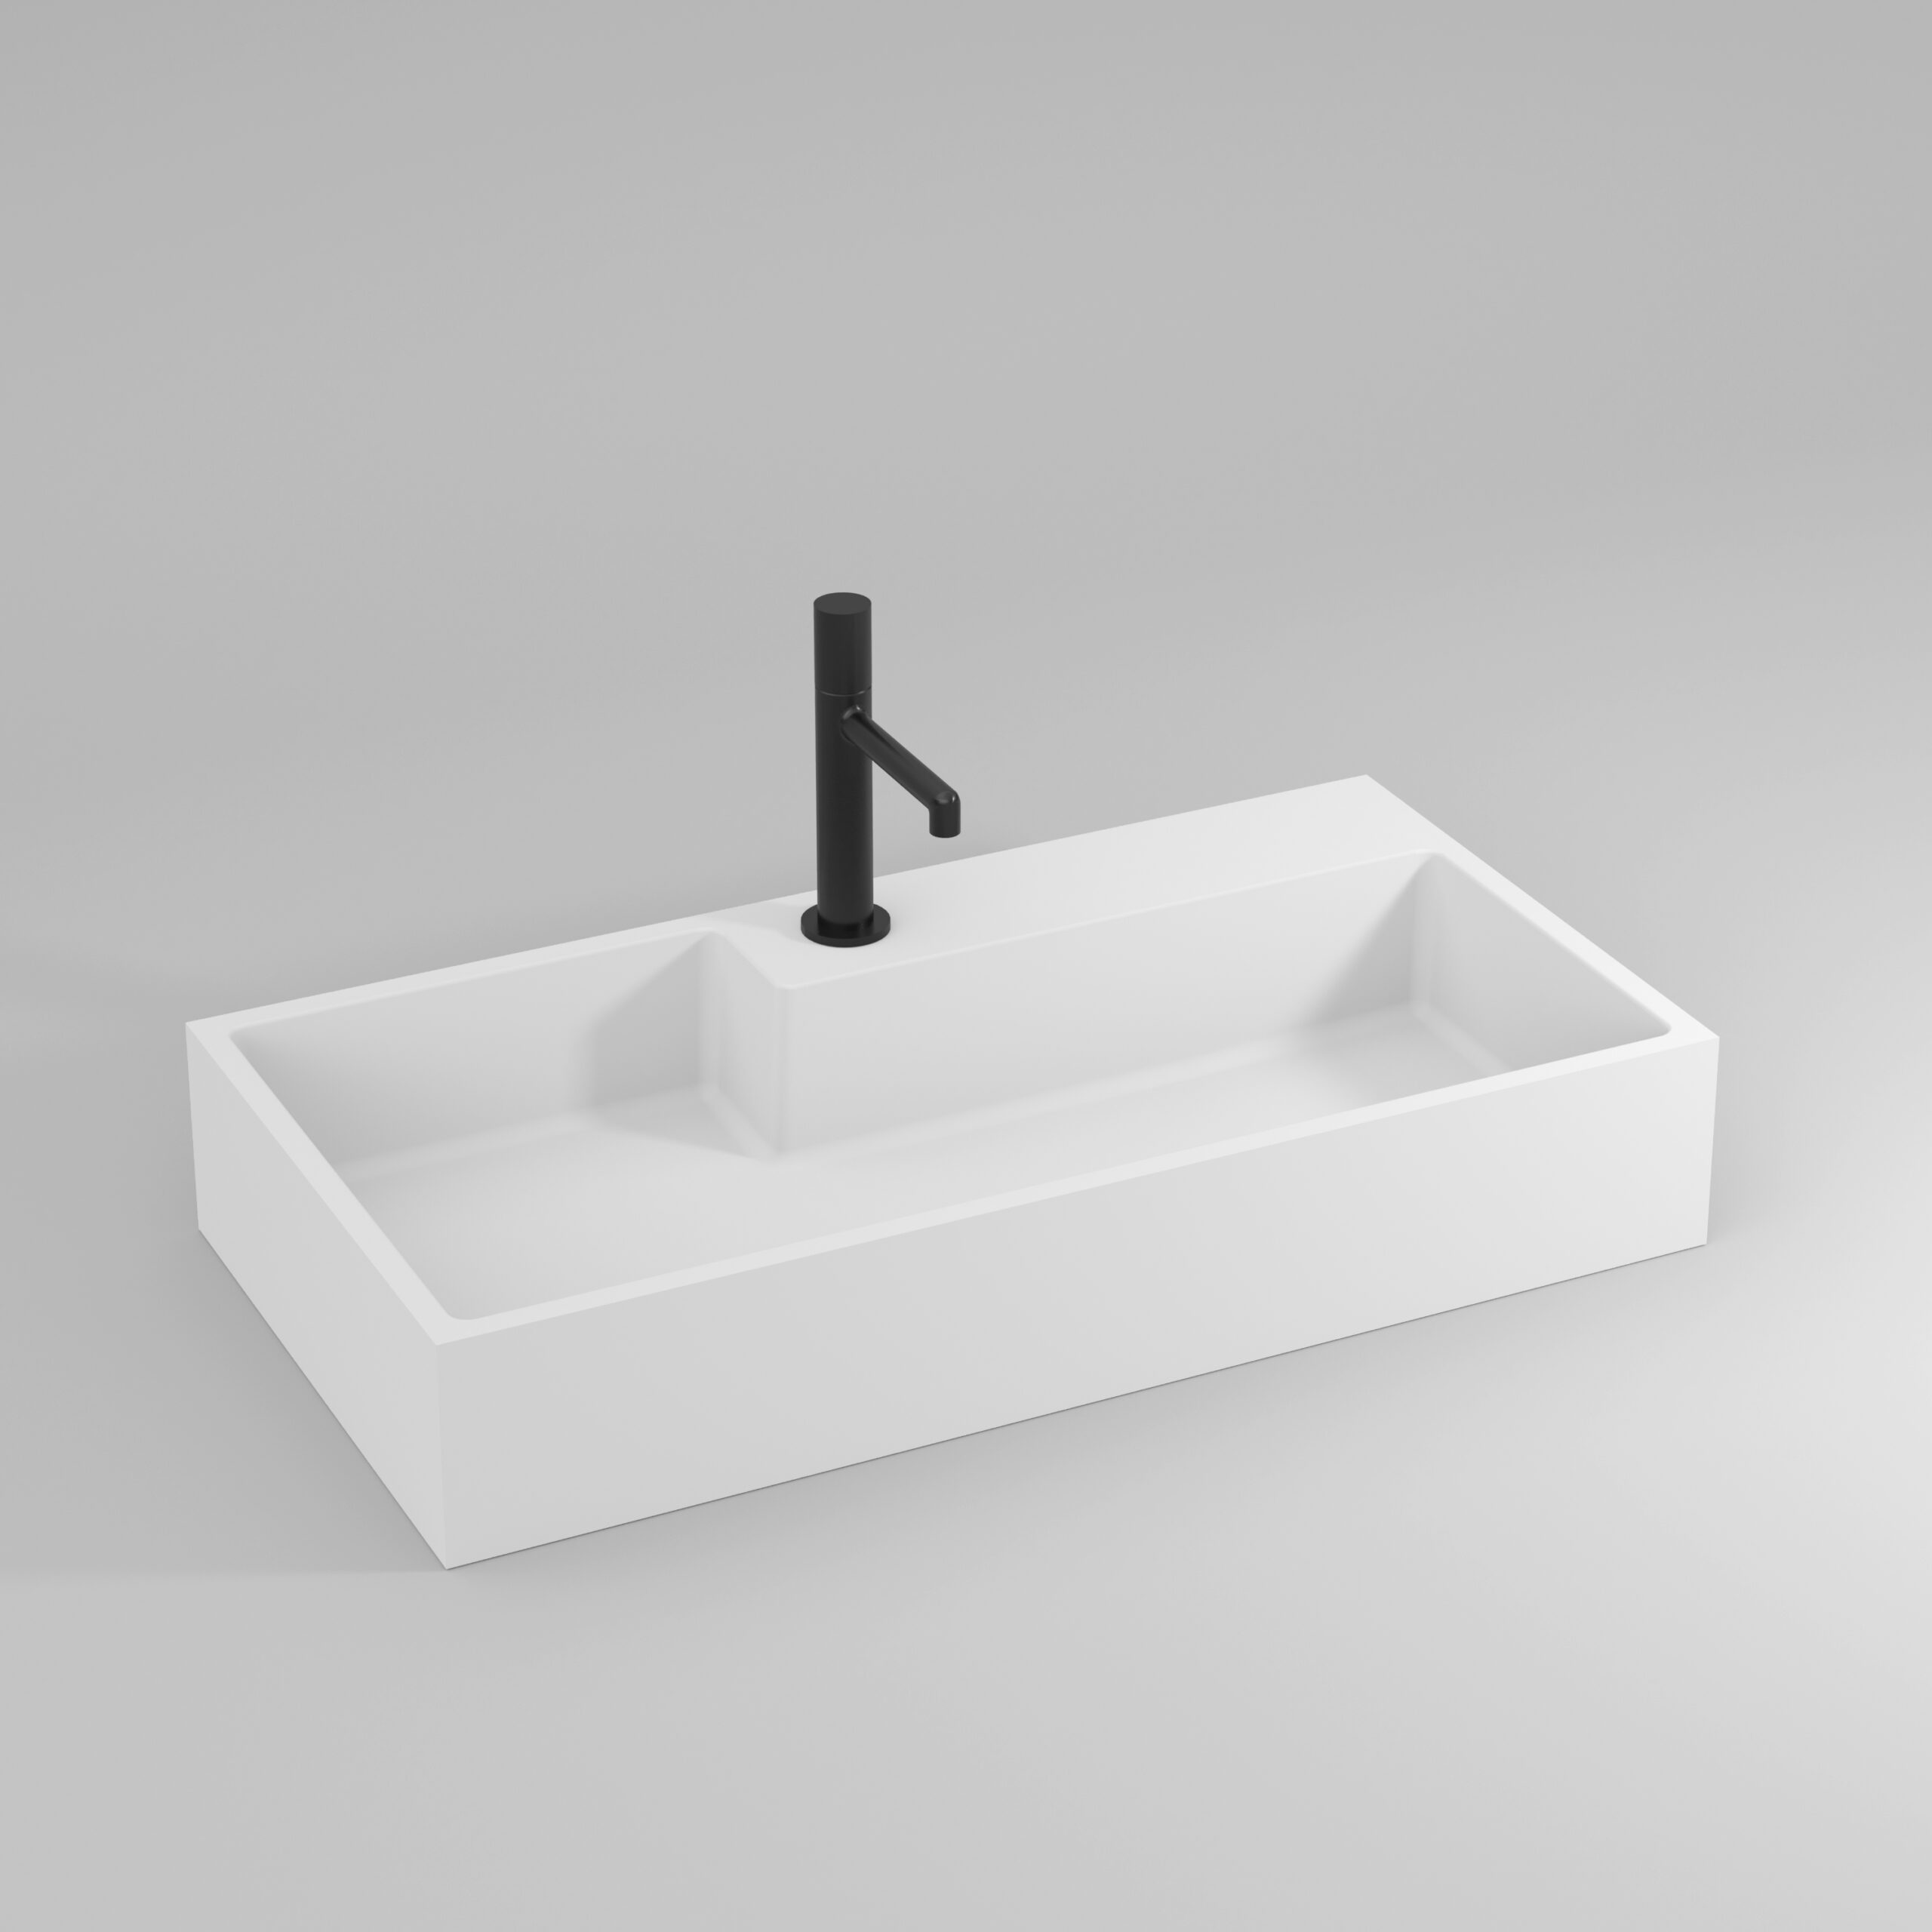 Cubik countertop washbasin